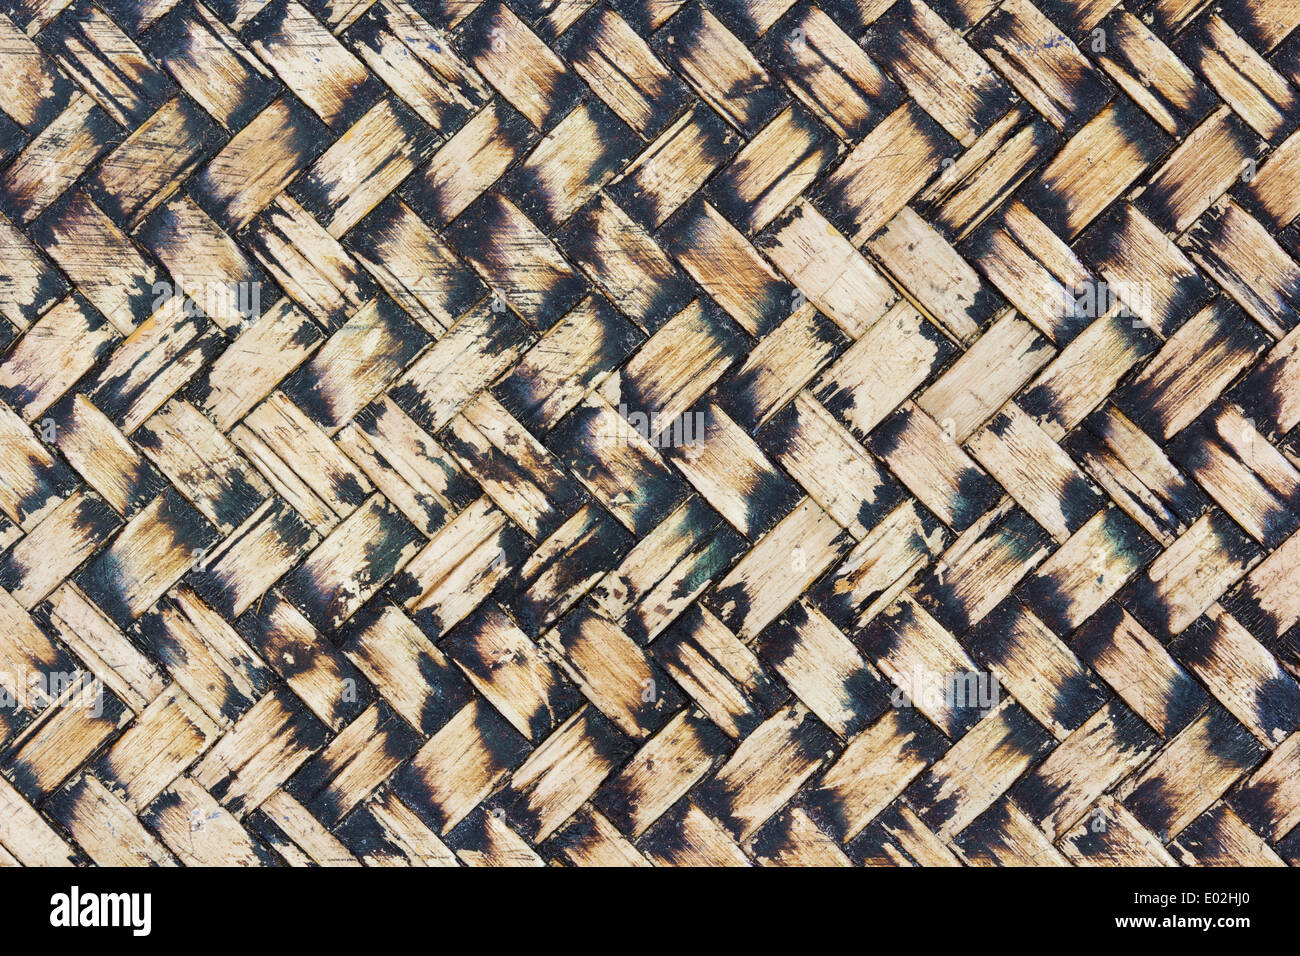 wicker woven rattan pattern close up background Stock Photo